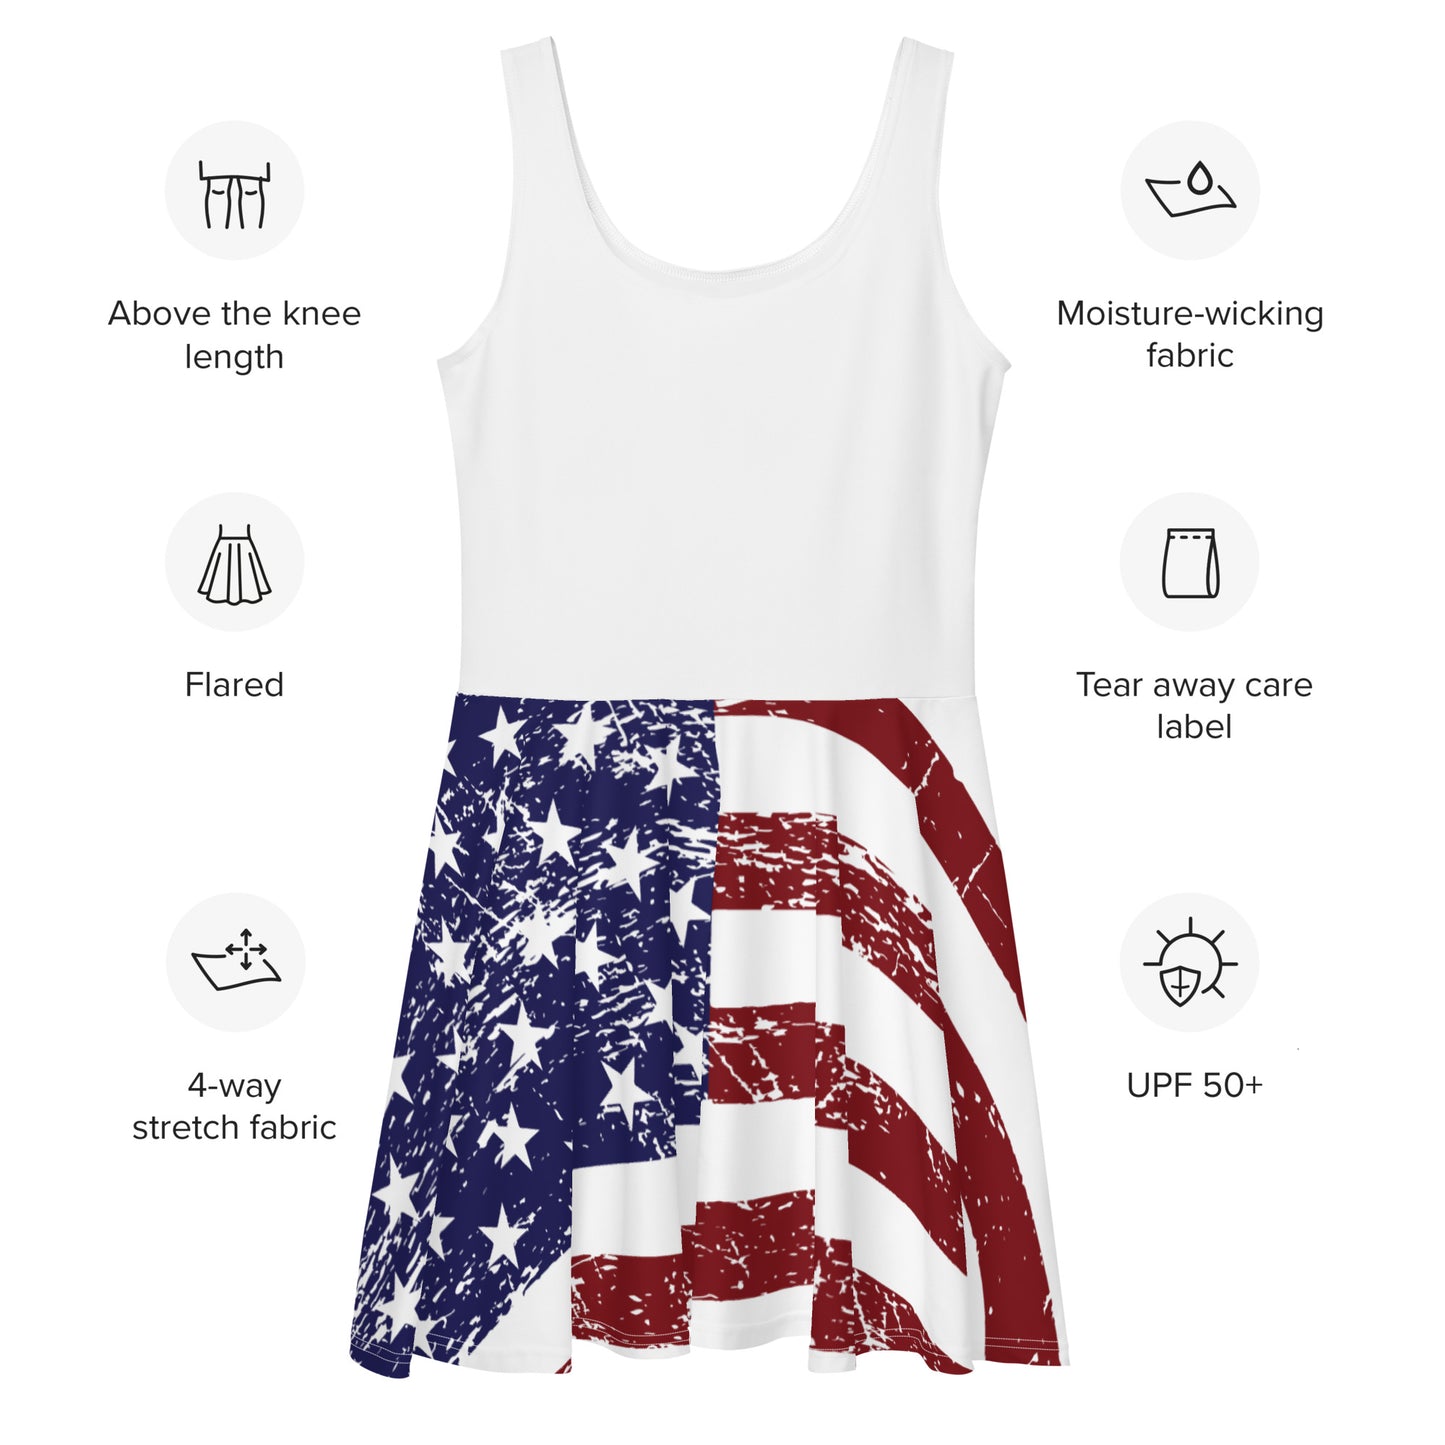 USA Flag Skater Dress w/ White Top